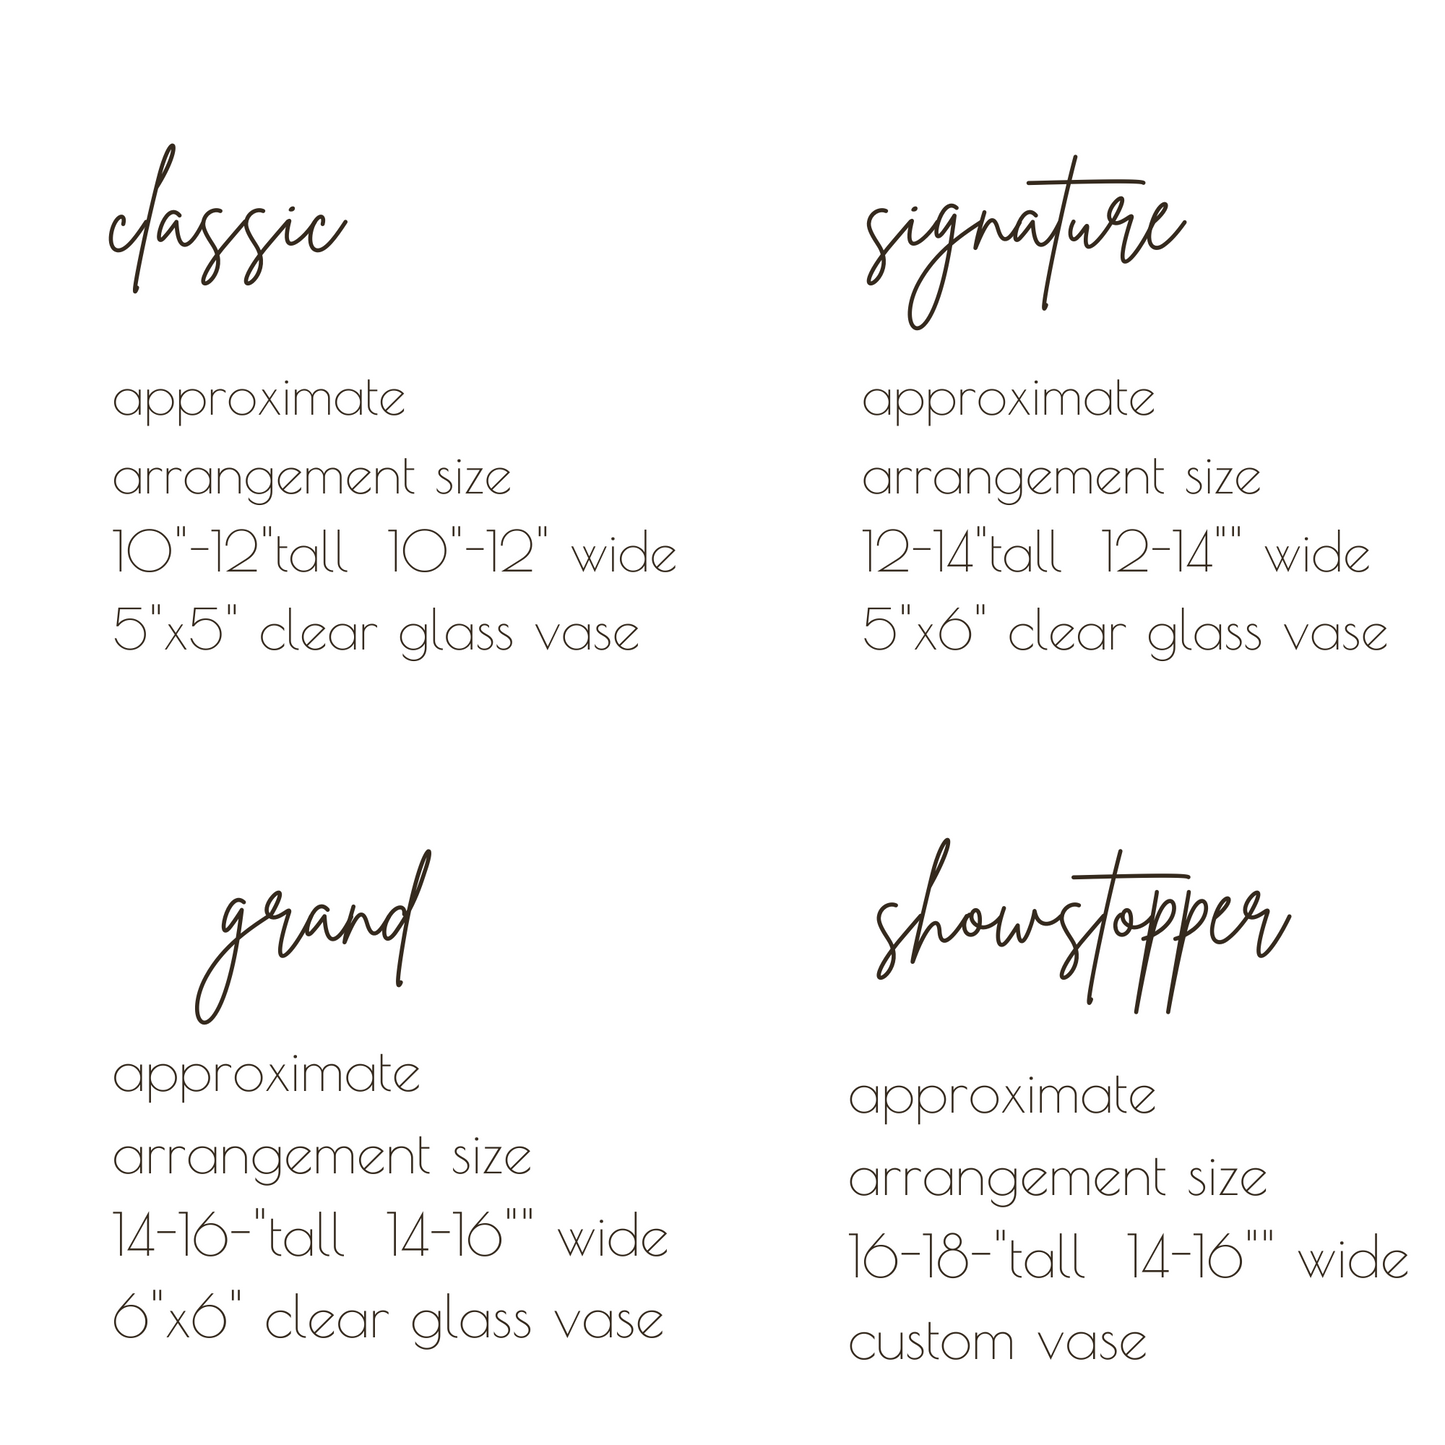 Designer's Choice | vase arrangement